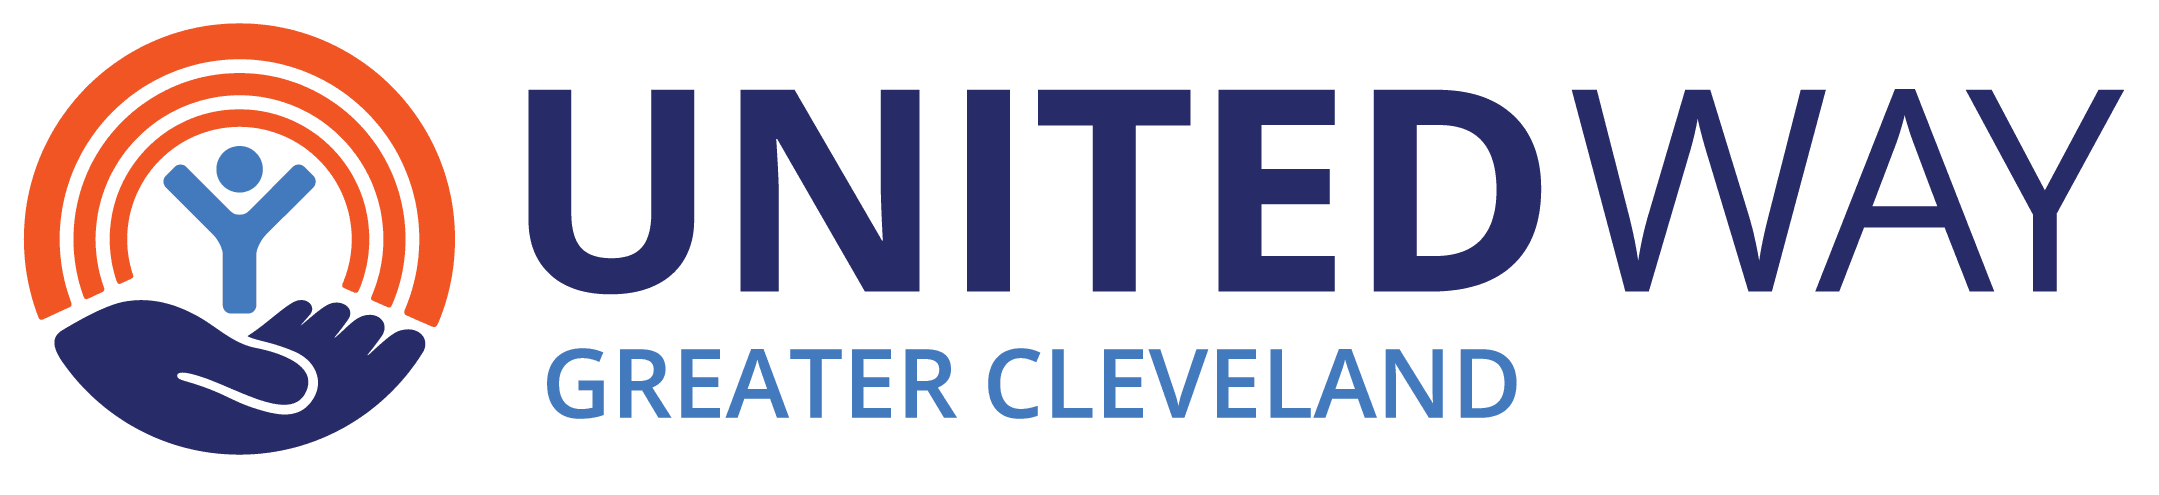 United Way Greater Cleveland logo